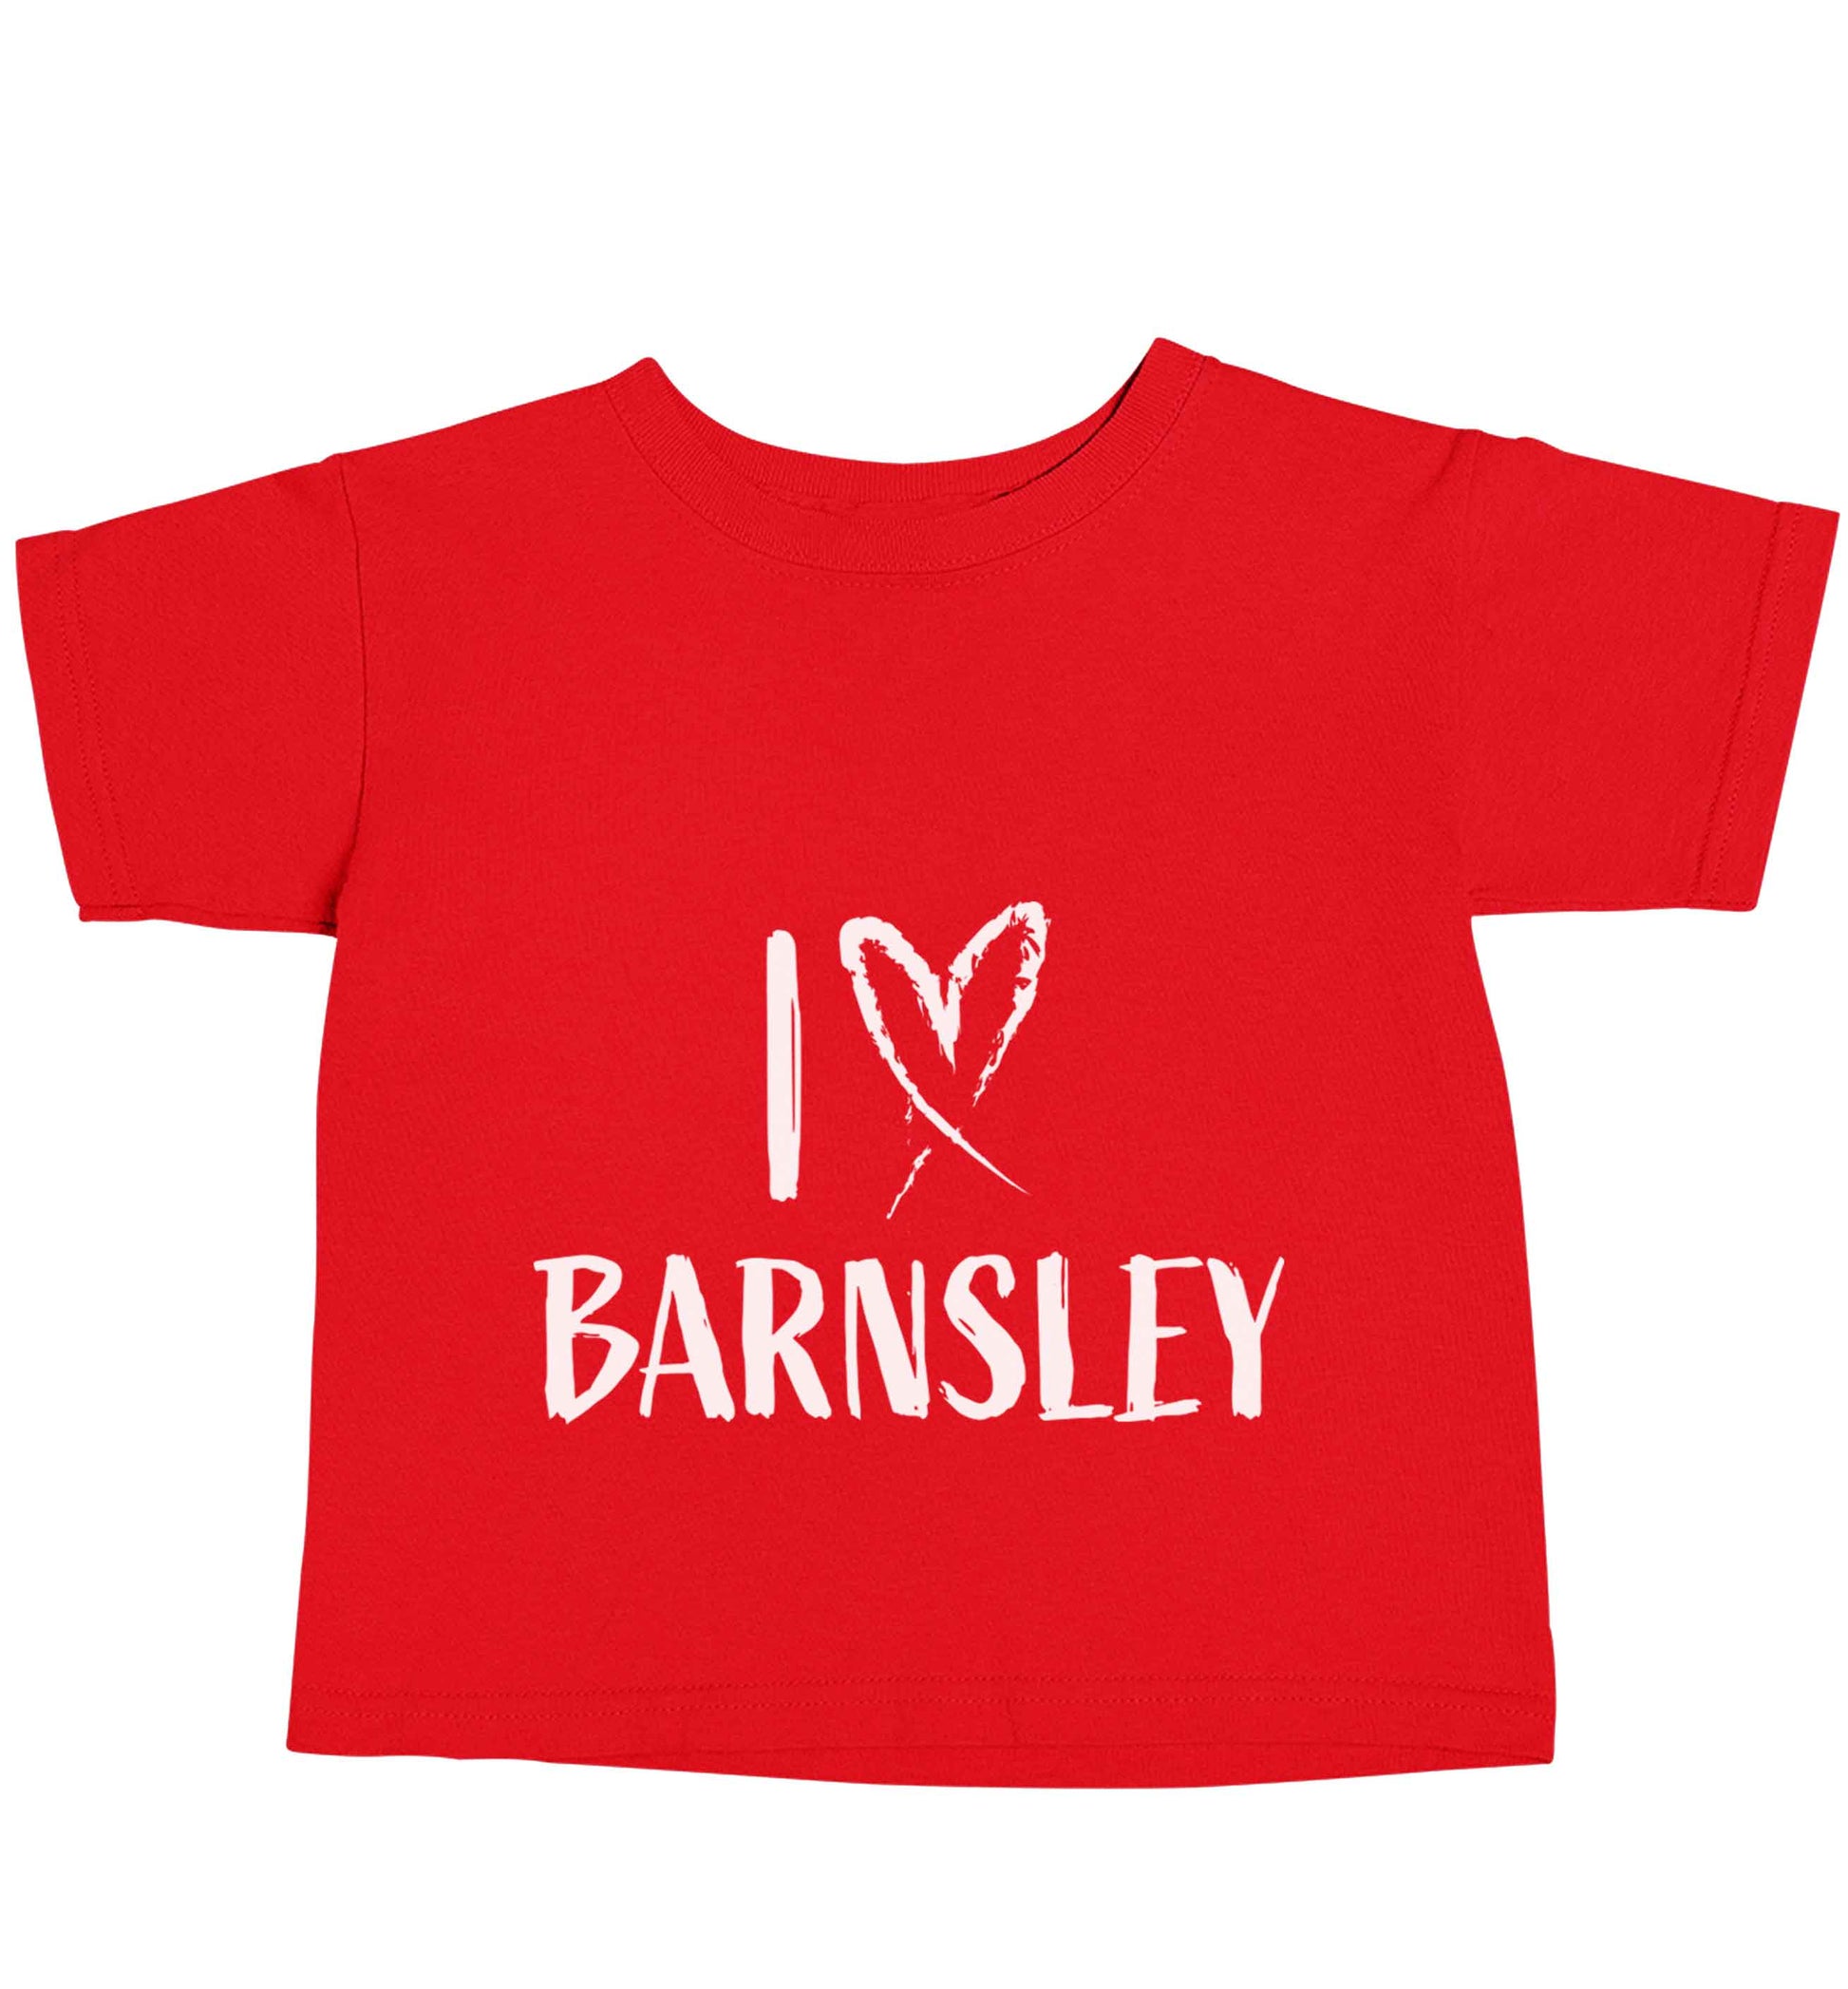 I love Barnsley red baby toddler Tshirt 2 Years